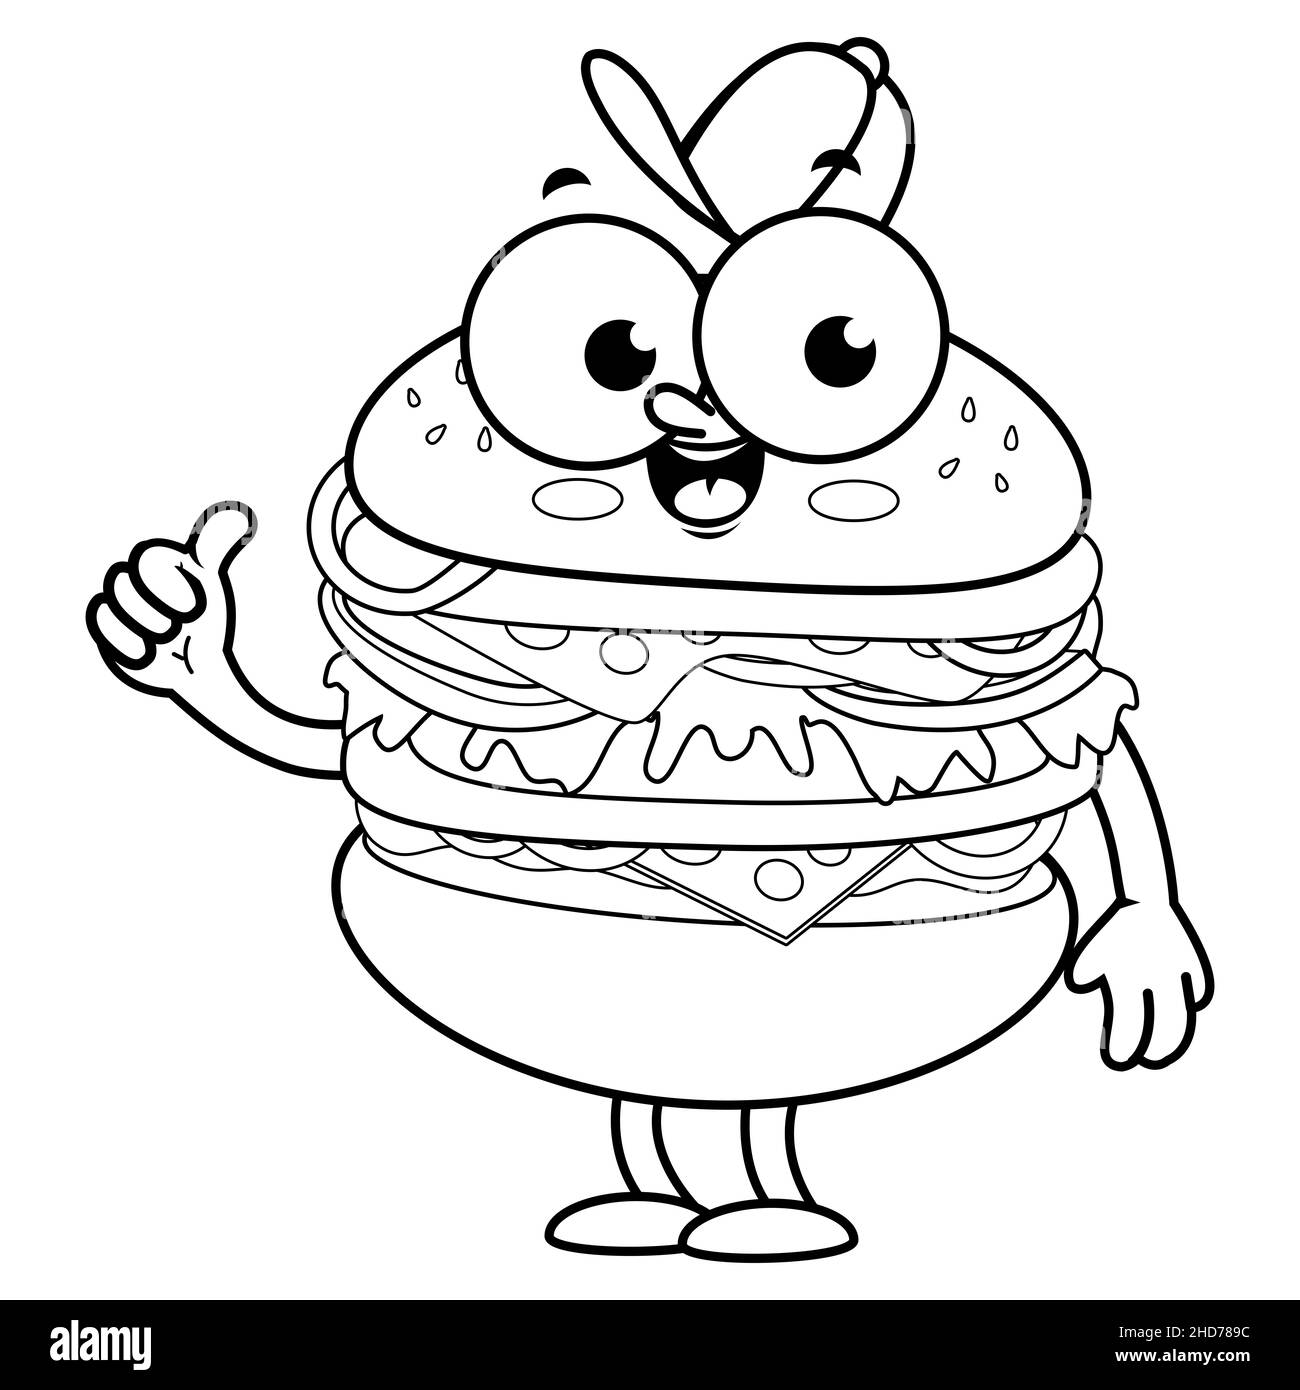 Hamburger character. Black and white coloring page Stock Photo